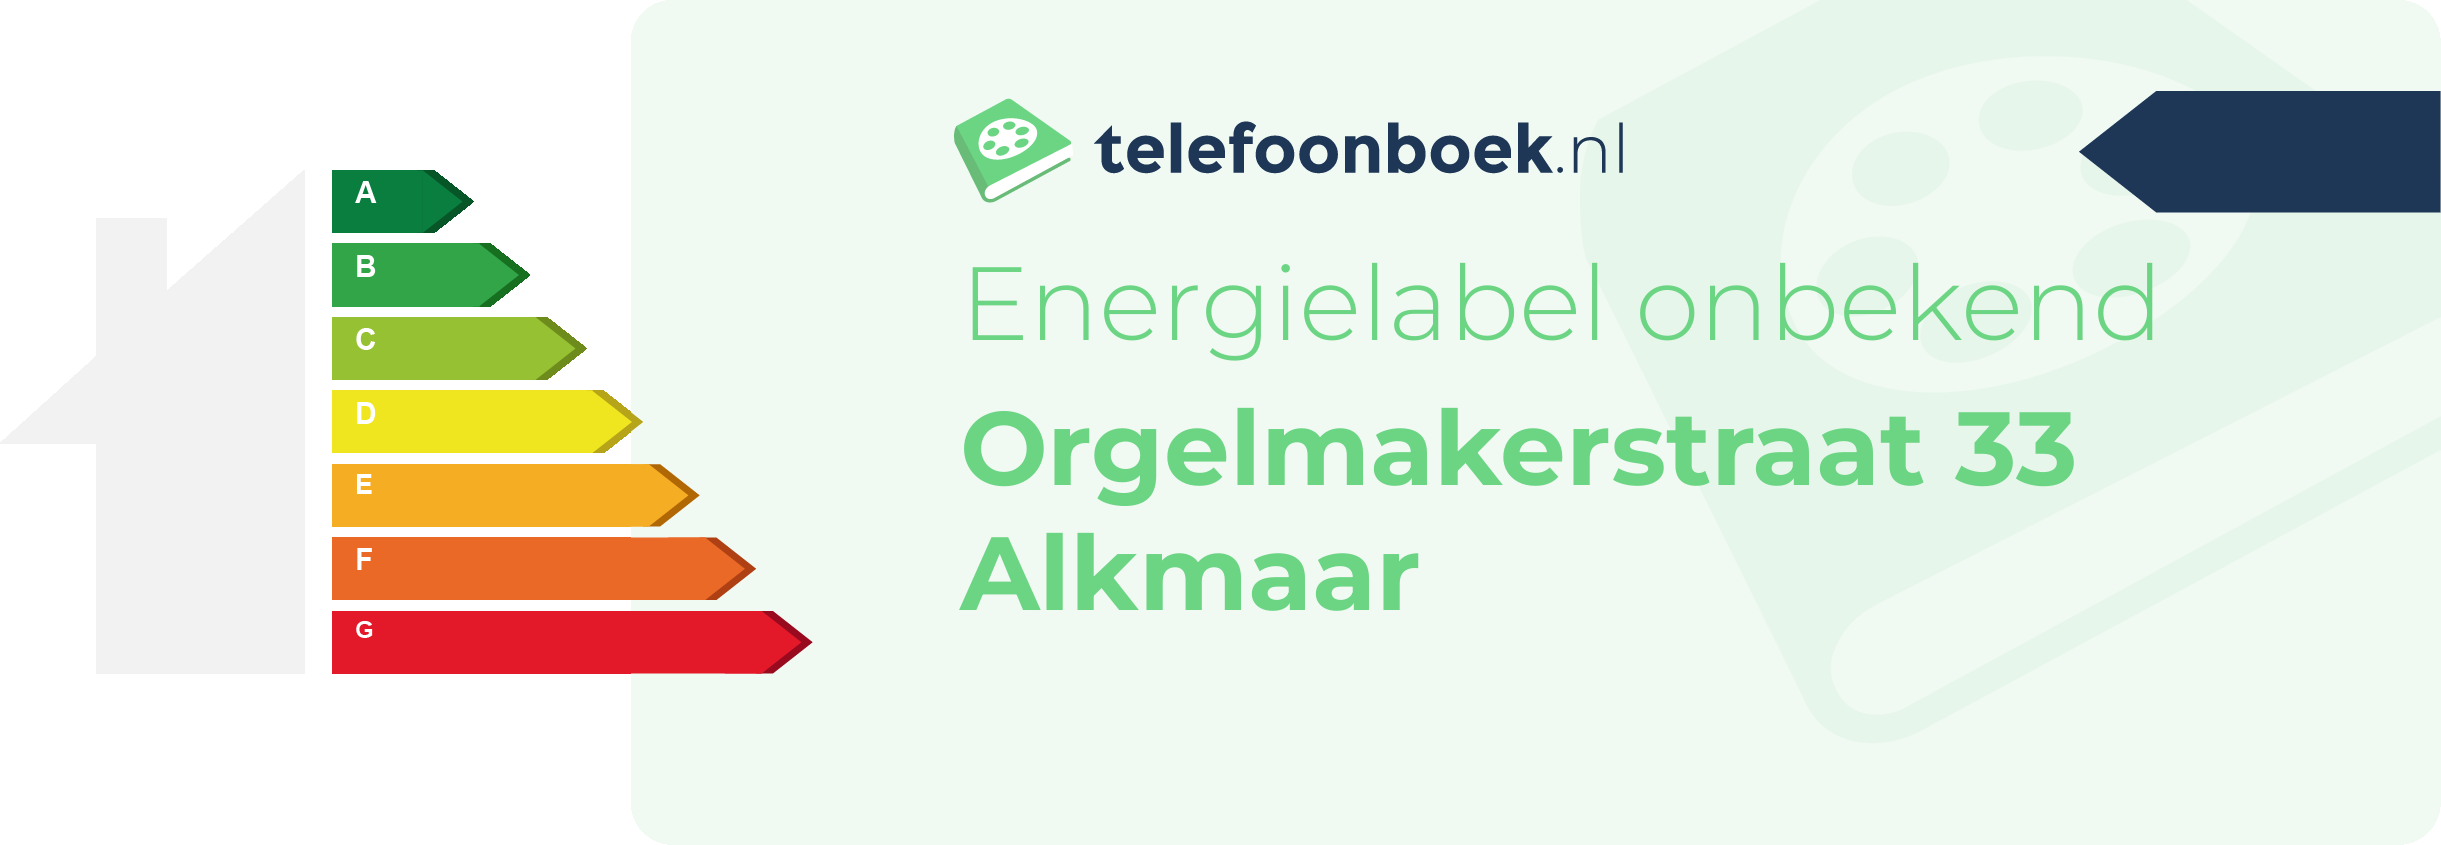 Energielabel Orgelmakerstraat 33 Alkmaar